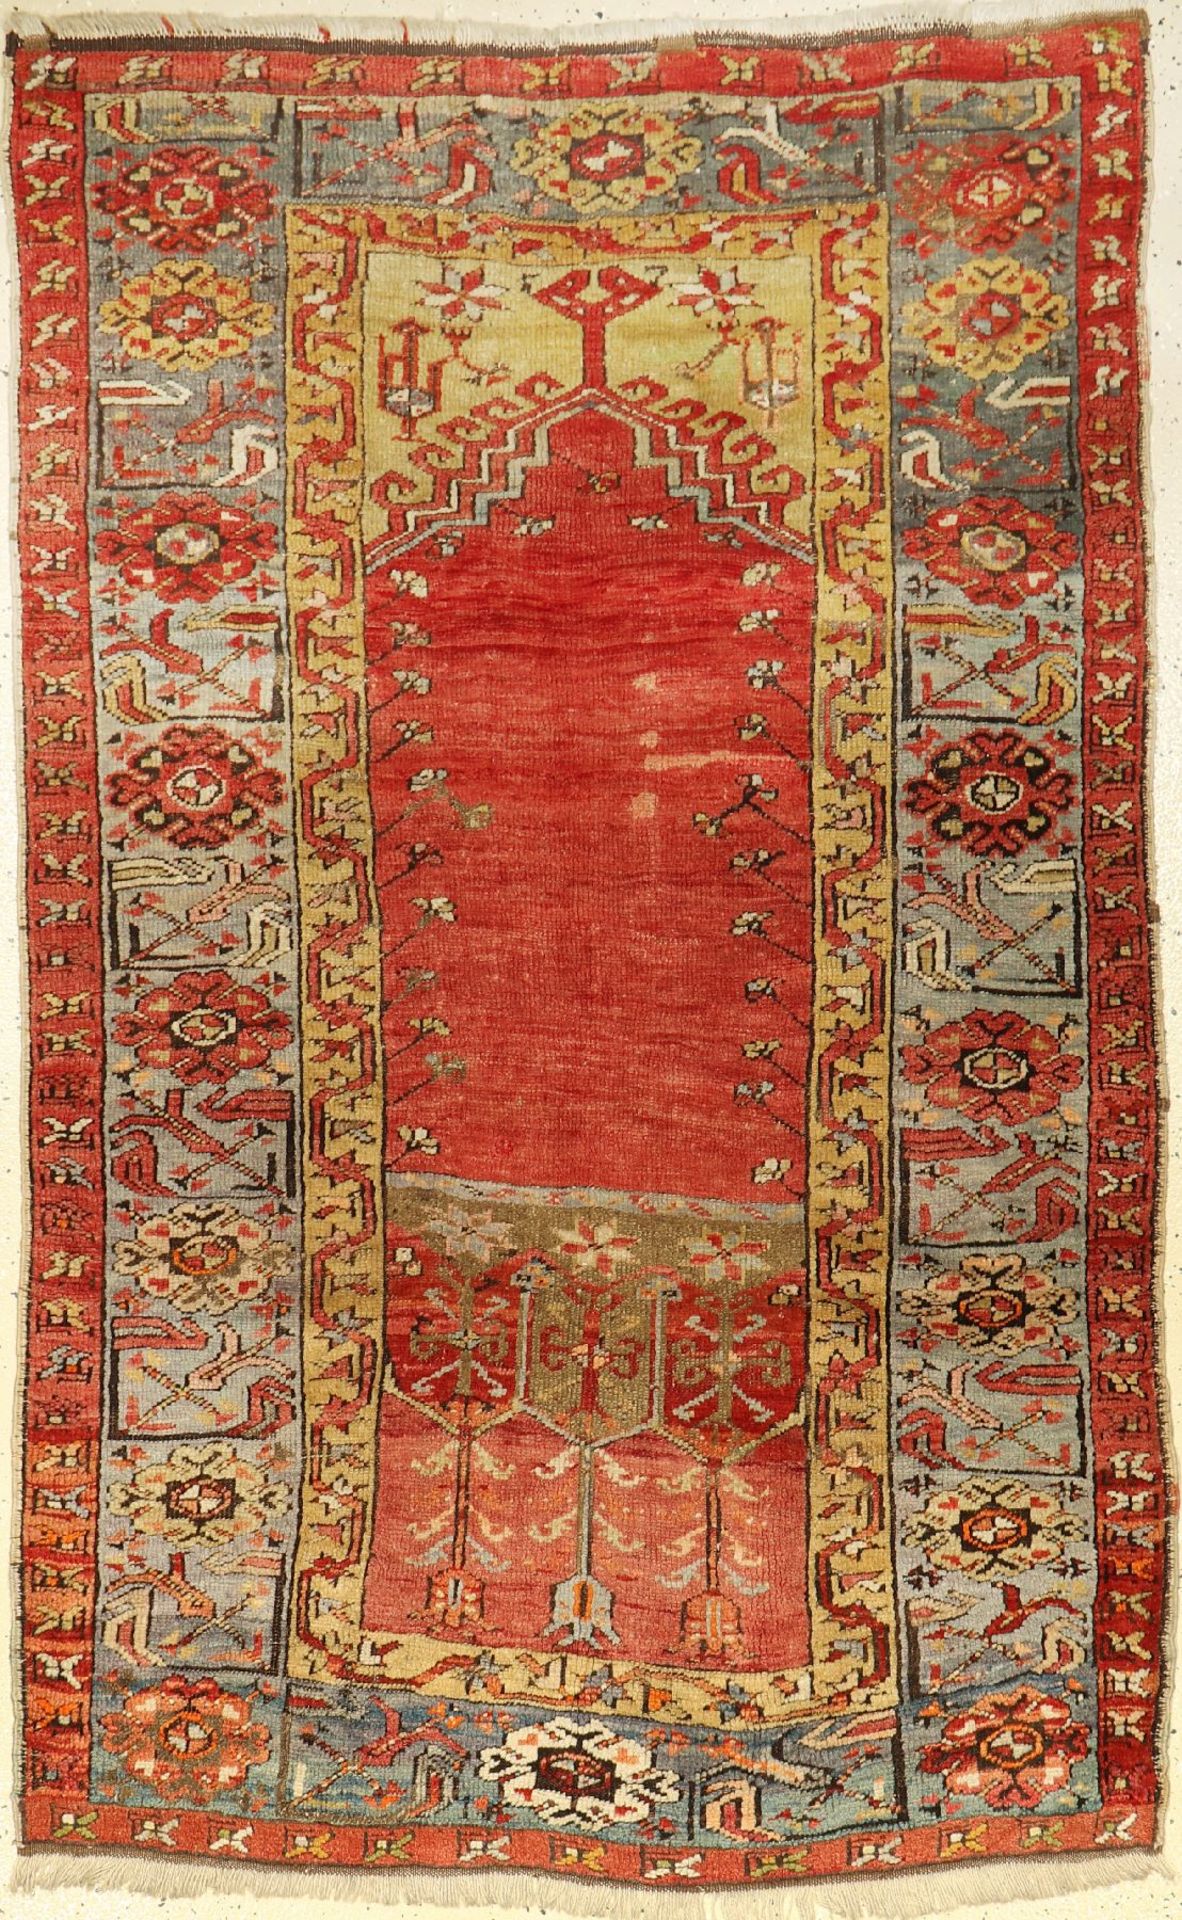 Anatol Prayer Rug, Turkey, around 1940, wool on wool, approx. 171 x 108 cm, condition: 3. Auction: